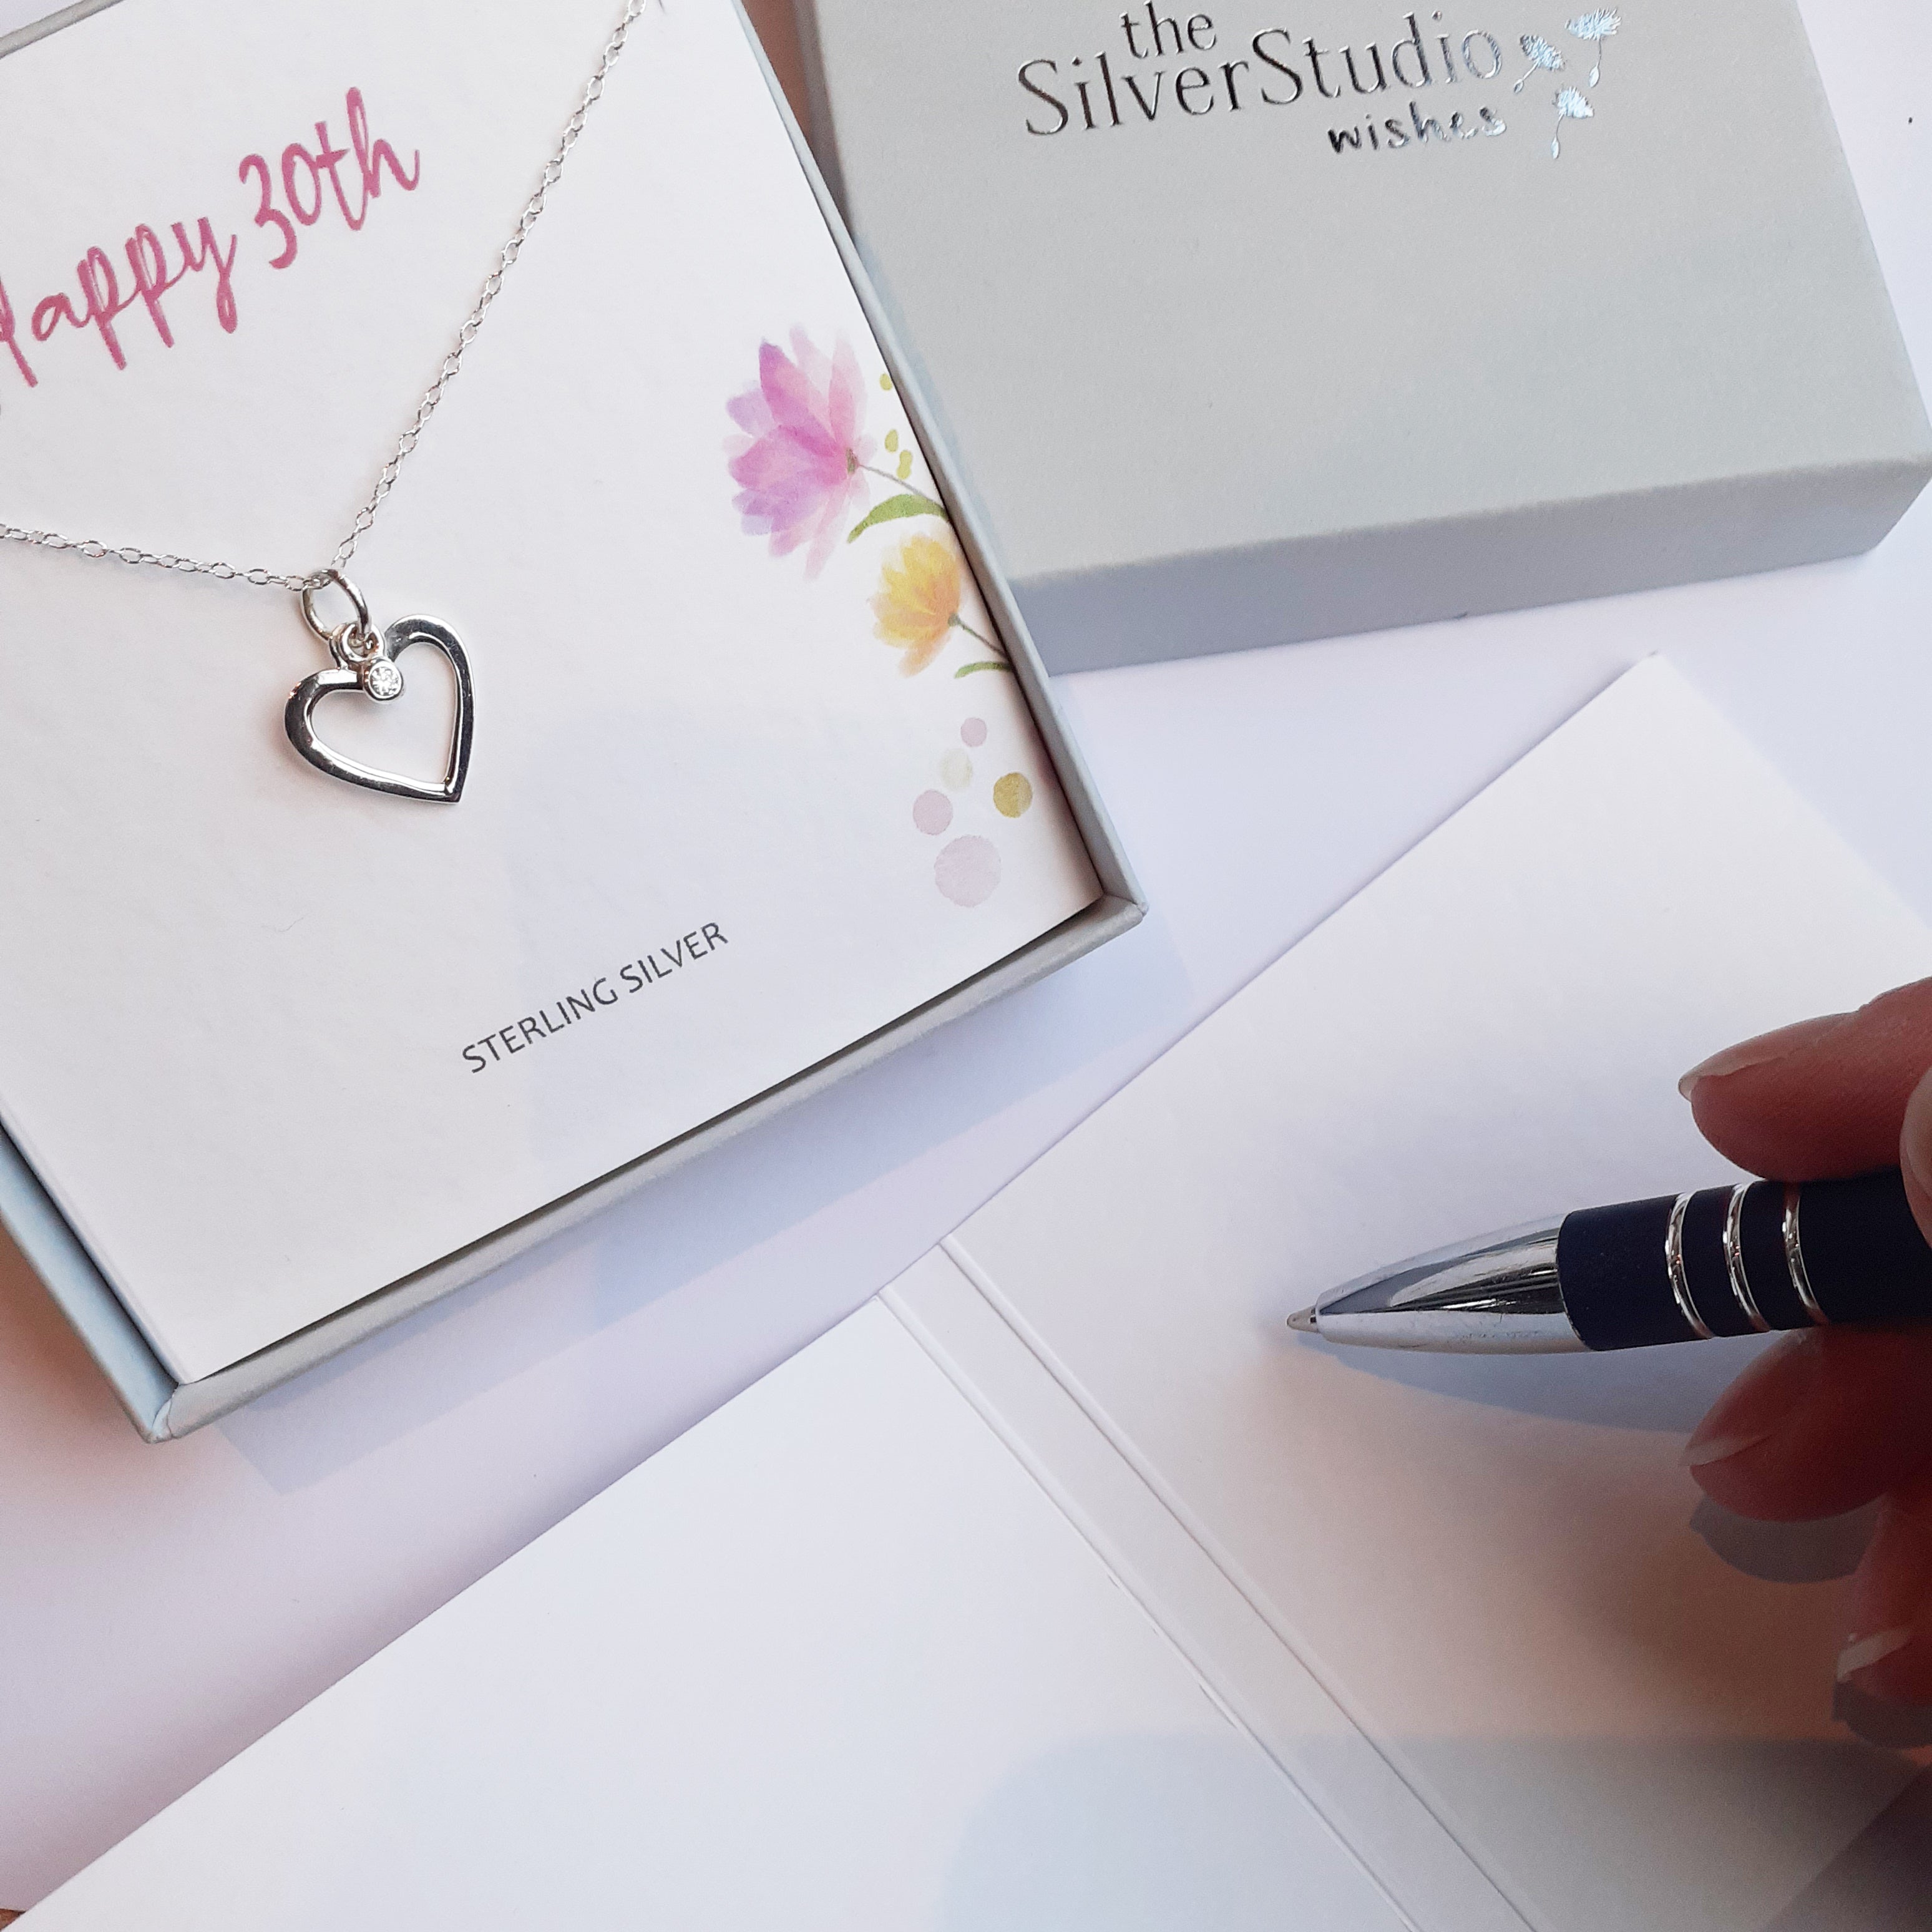 Silver Studio Wishes - March Birthstone Heart Pendant